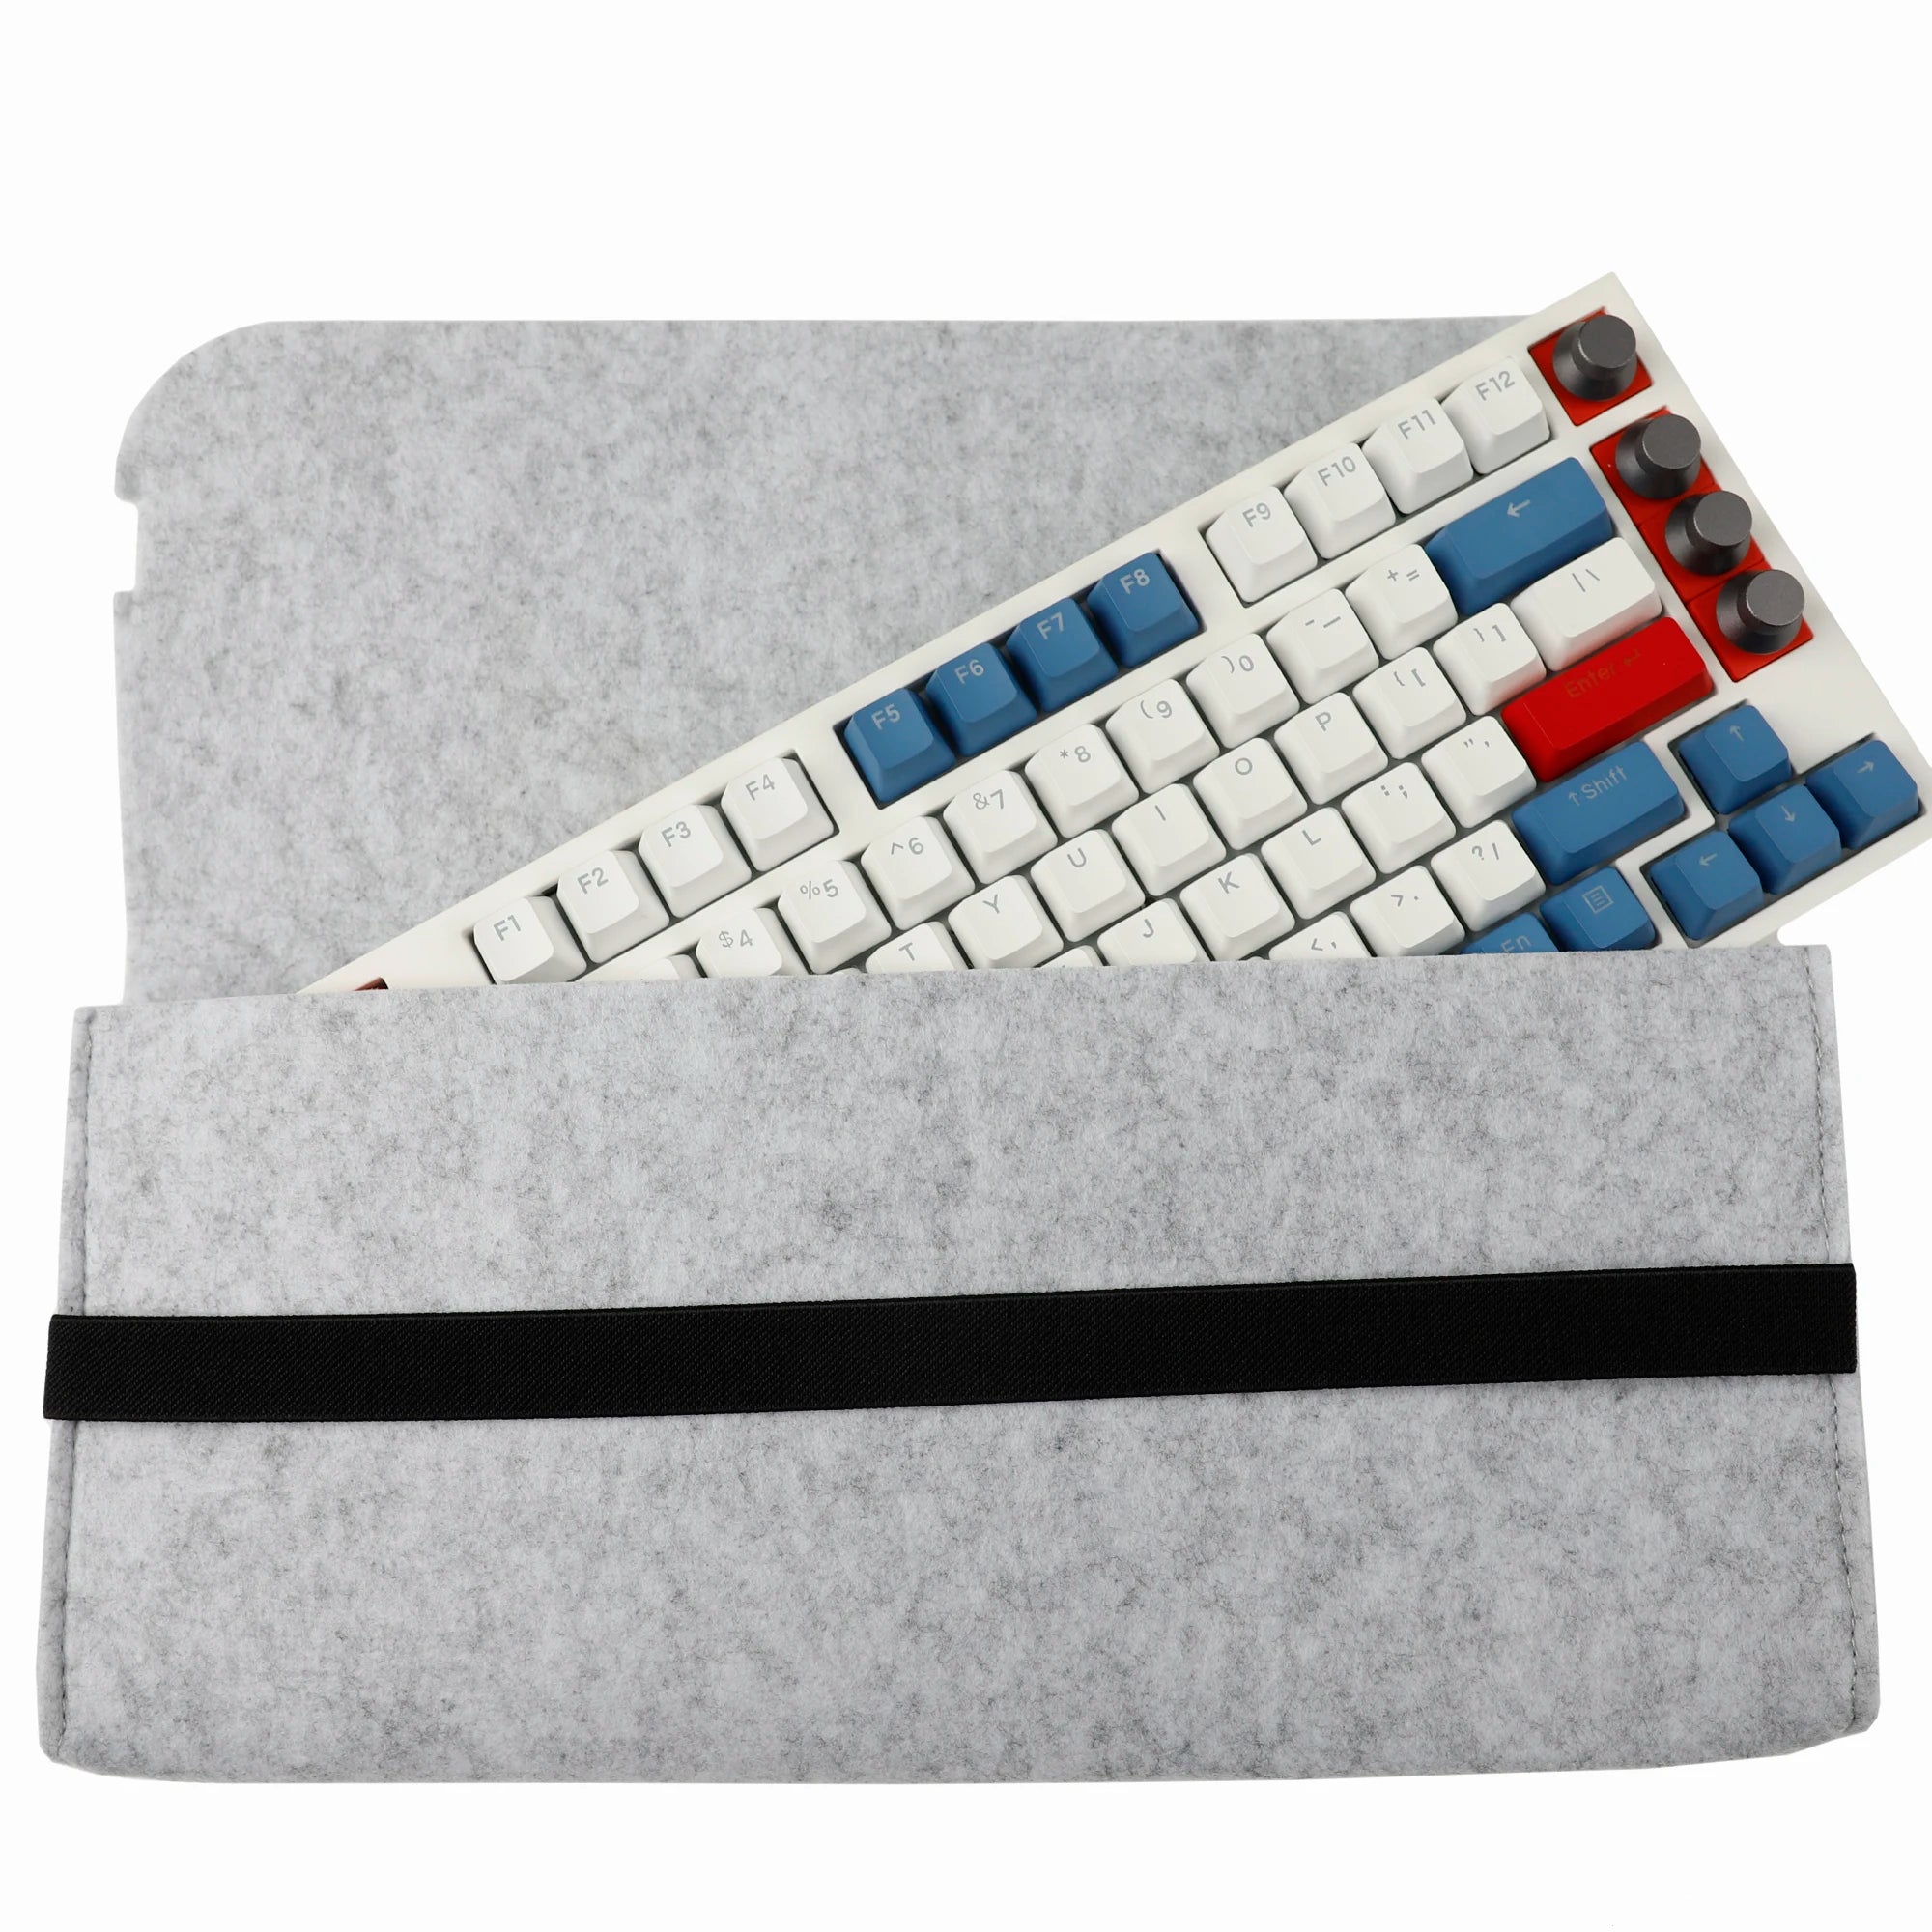 YMDK Mechanical Keyboard Dust Cover Bag